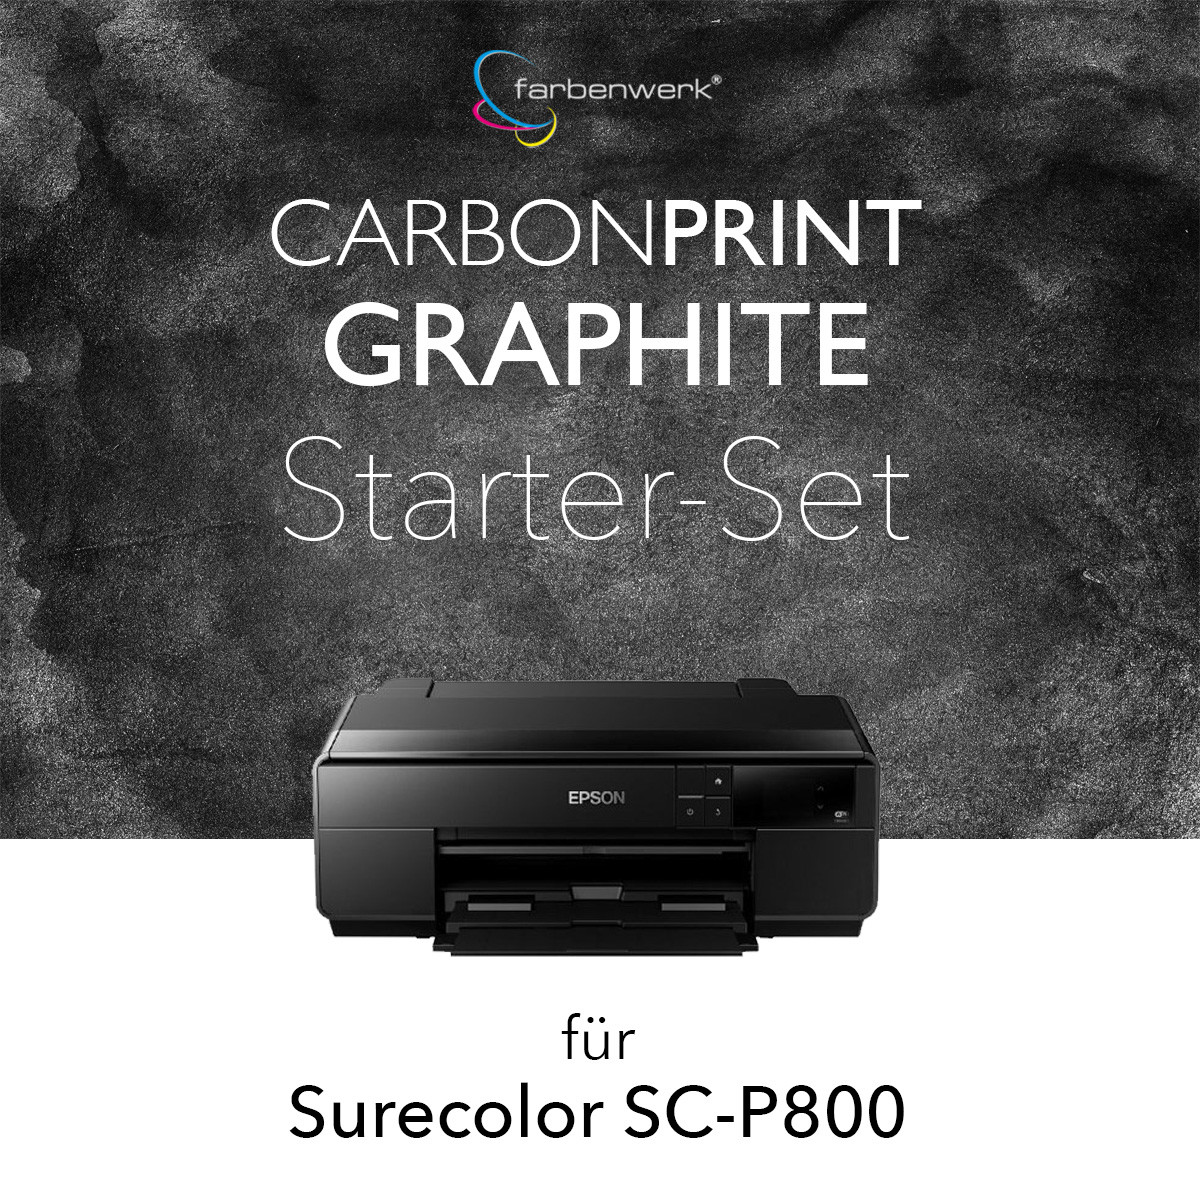 Starter-Set Carbonprint Graphite for SC-P800